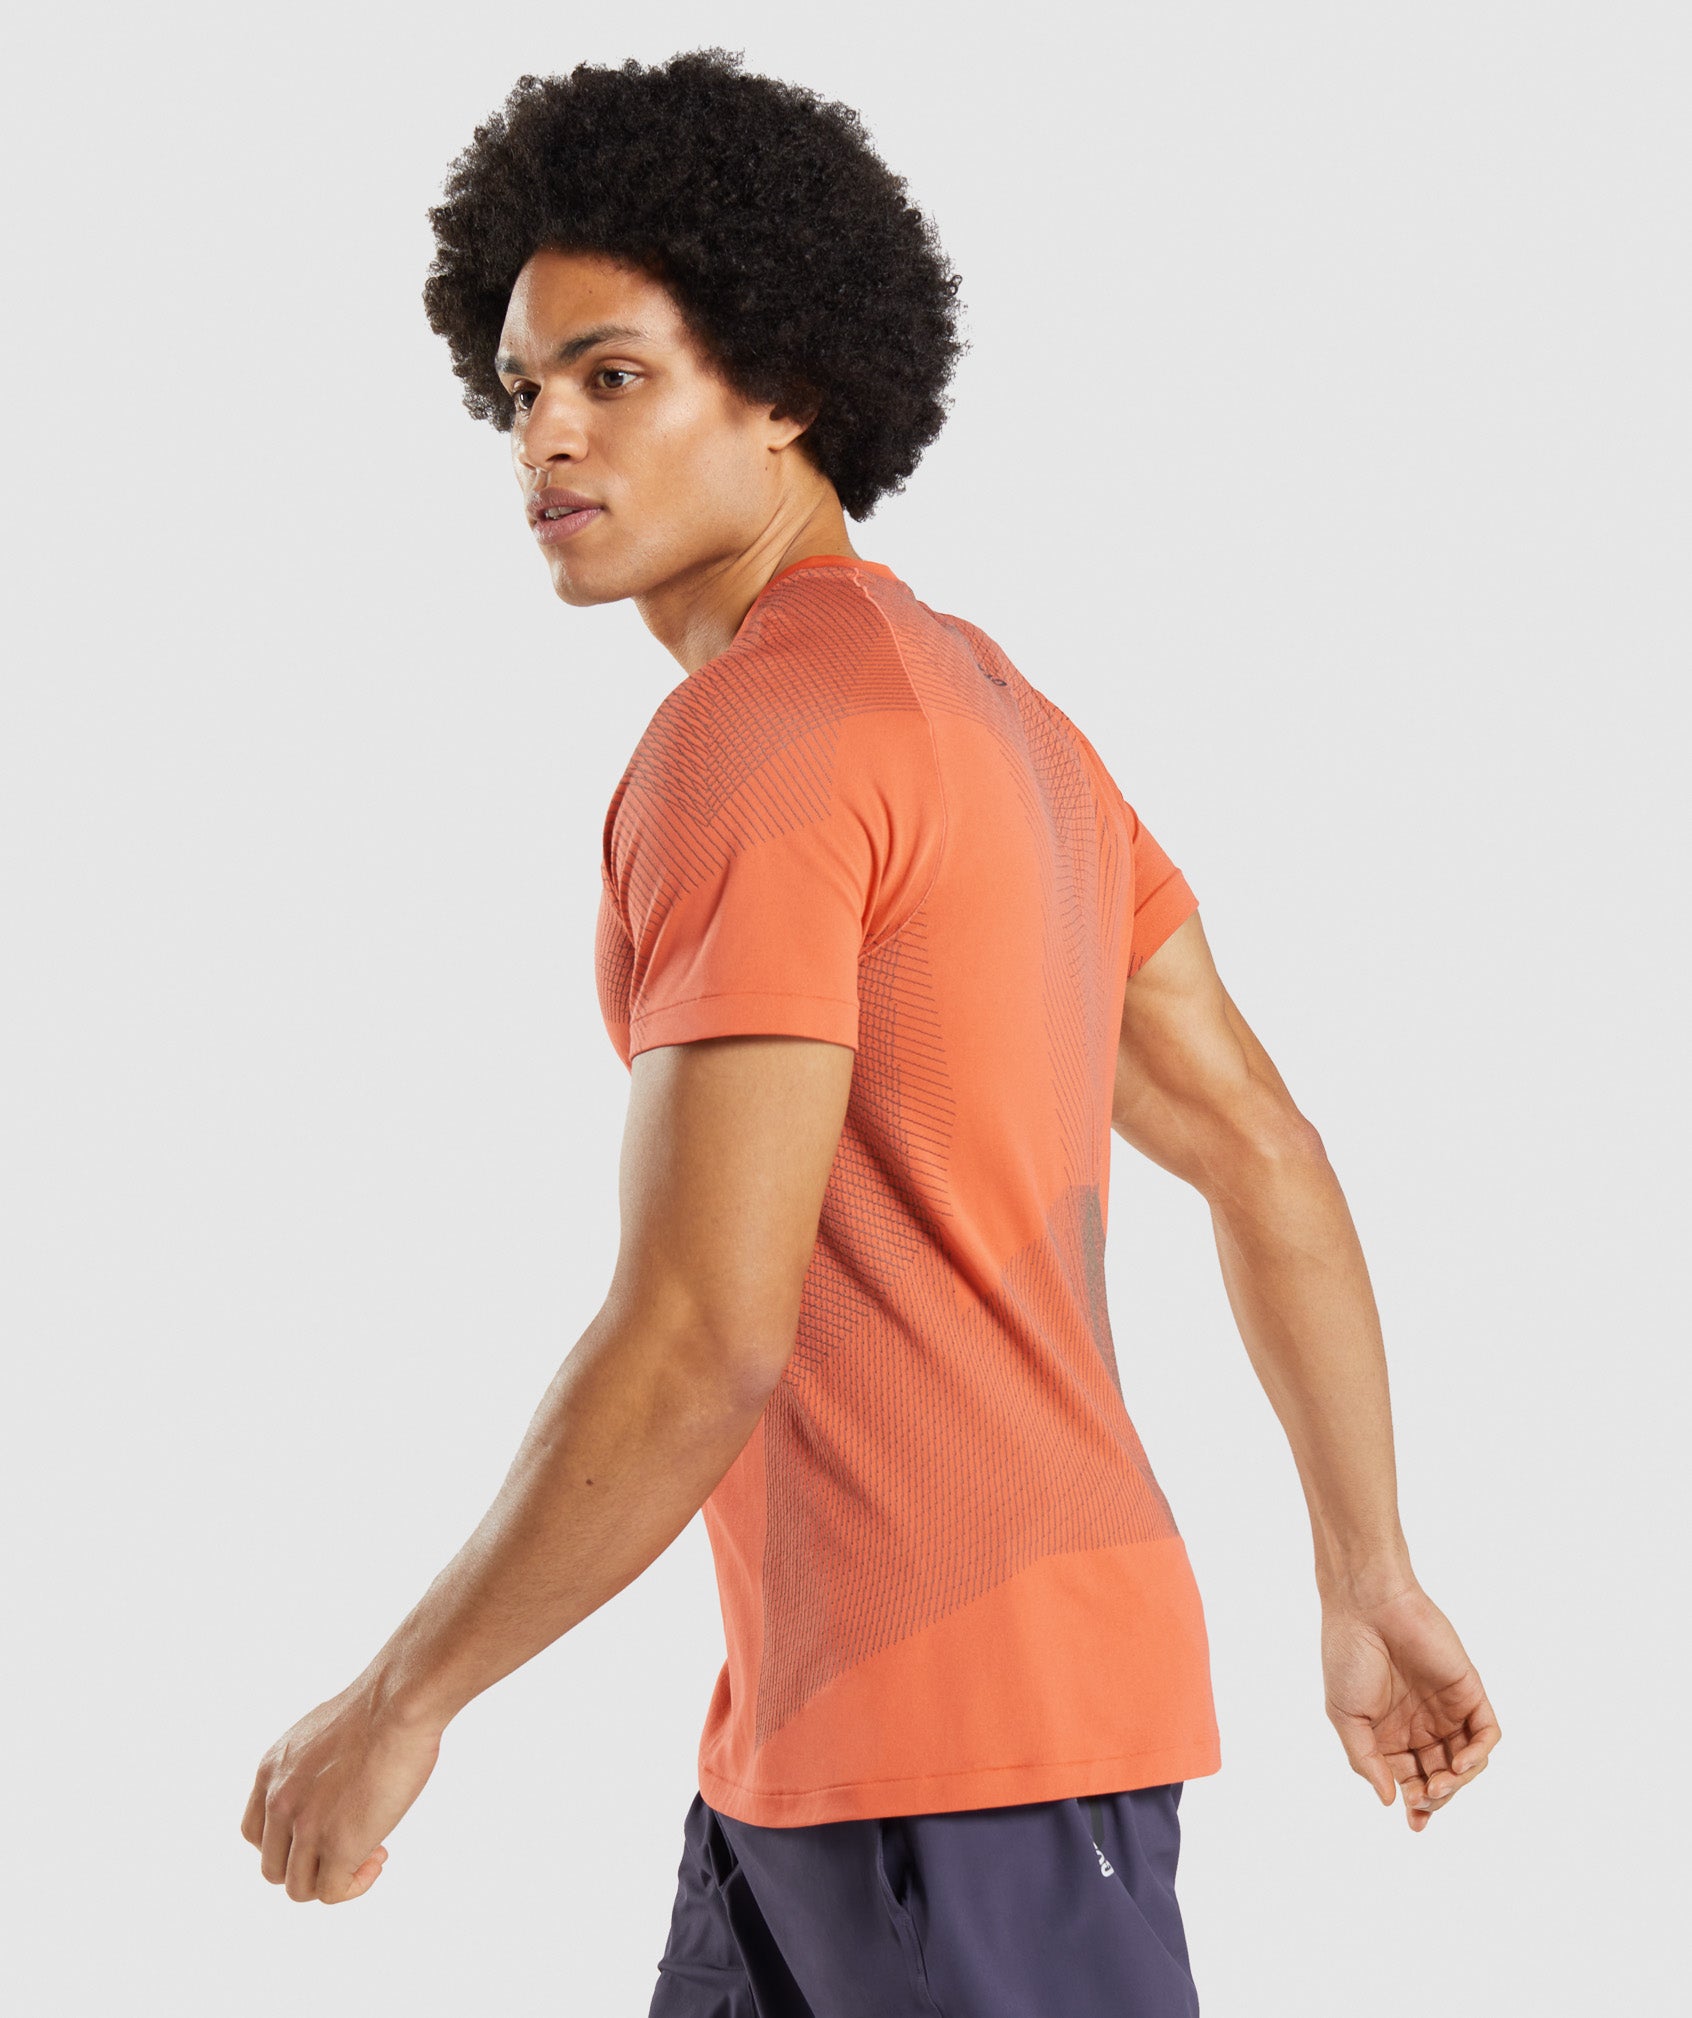 Gymshark Apex Seamless T-shirts Herren Orange | 3176209-LT